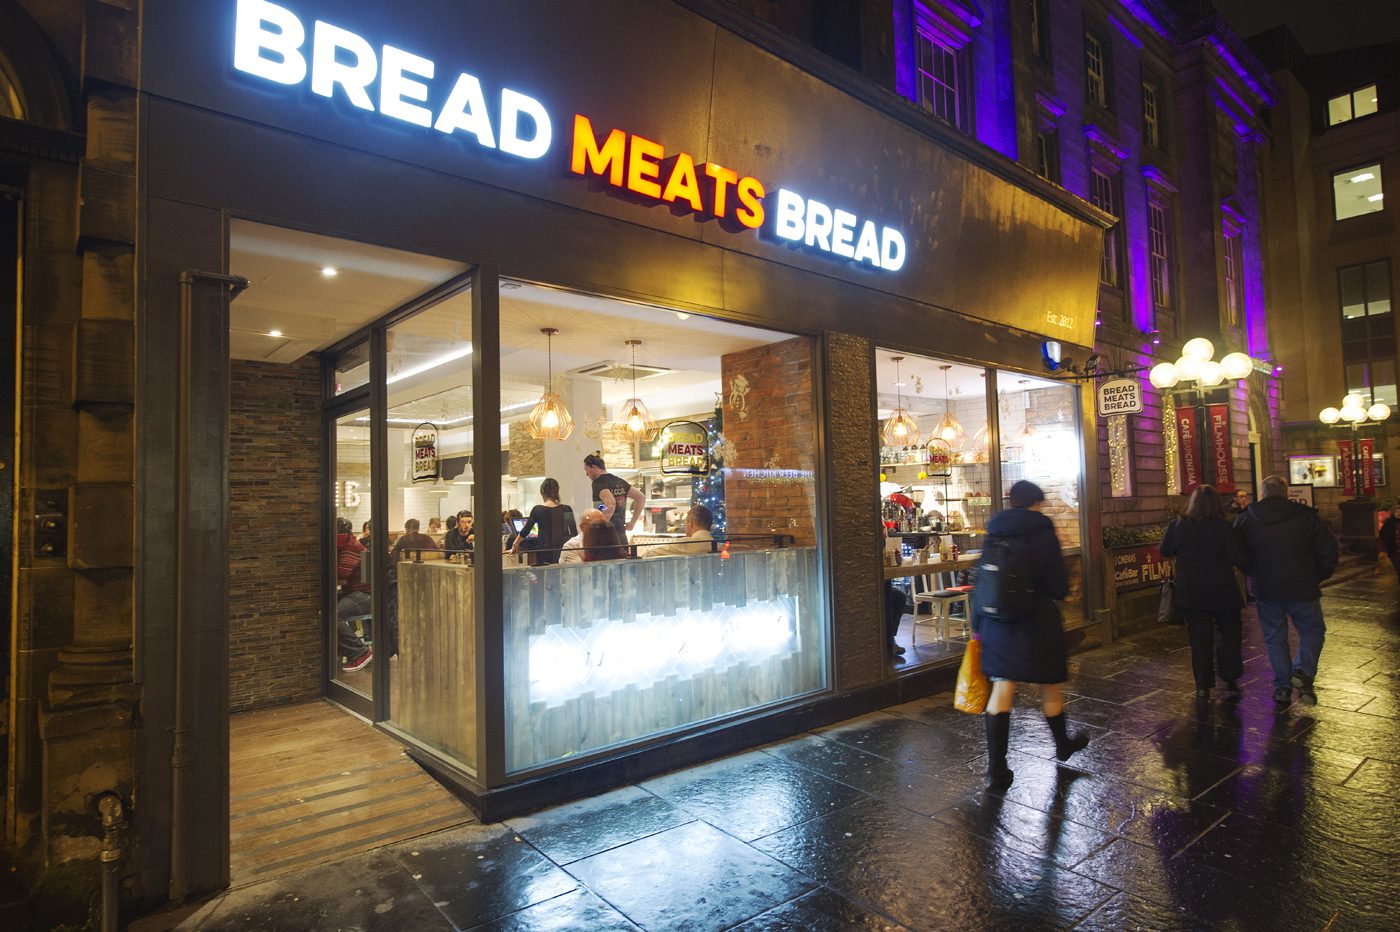 Bread Meets Bread, Edinburgh